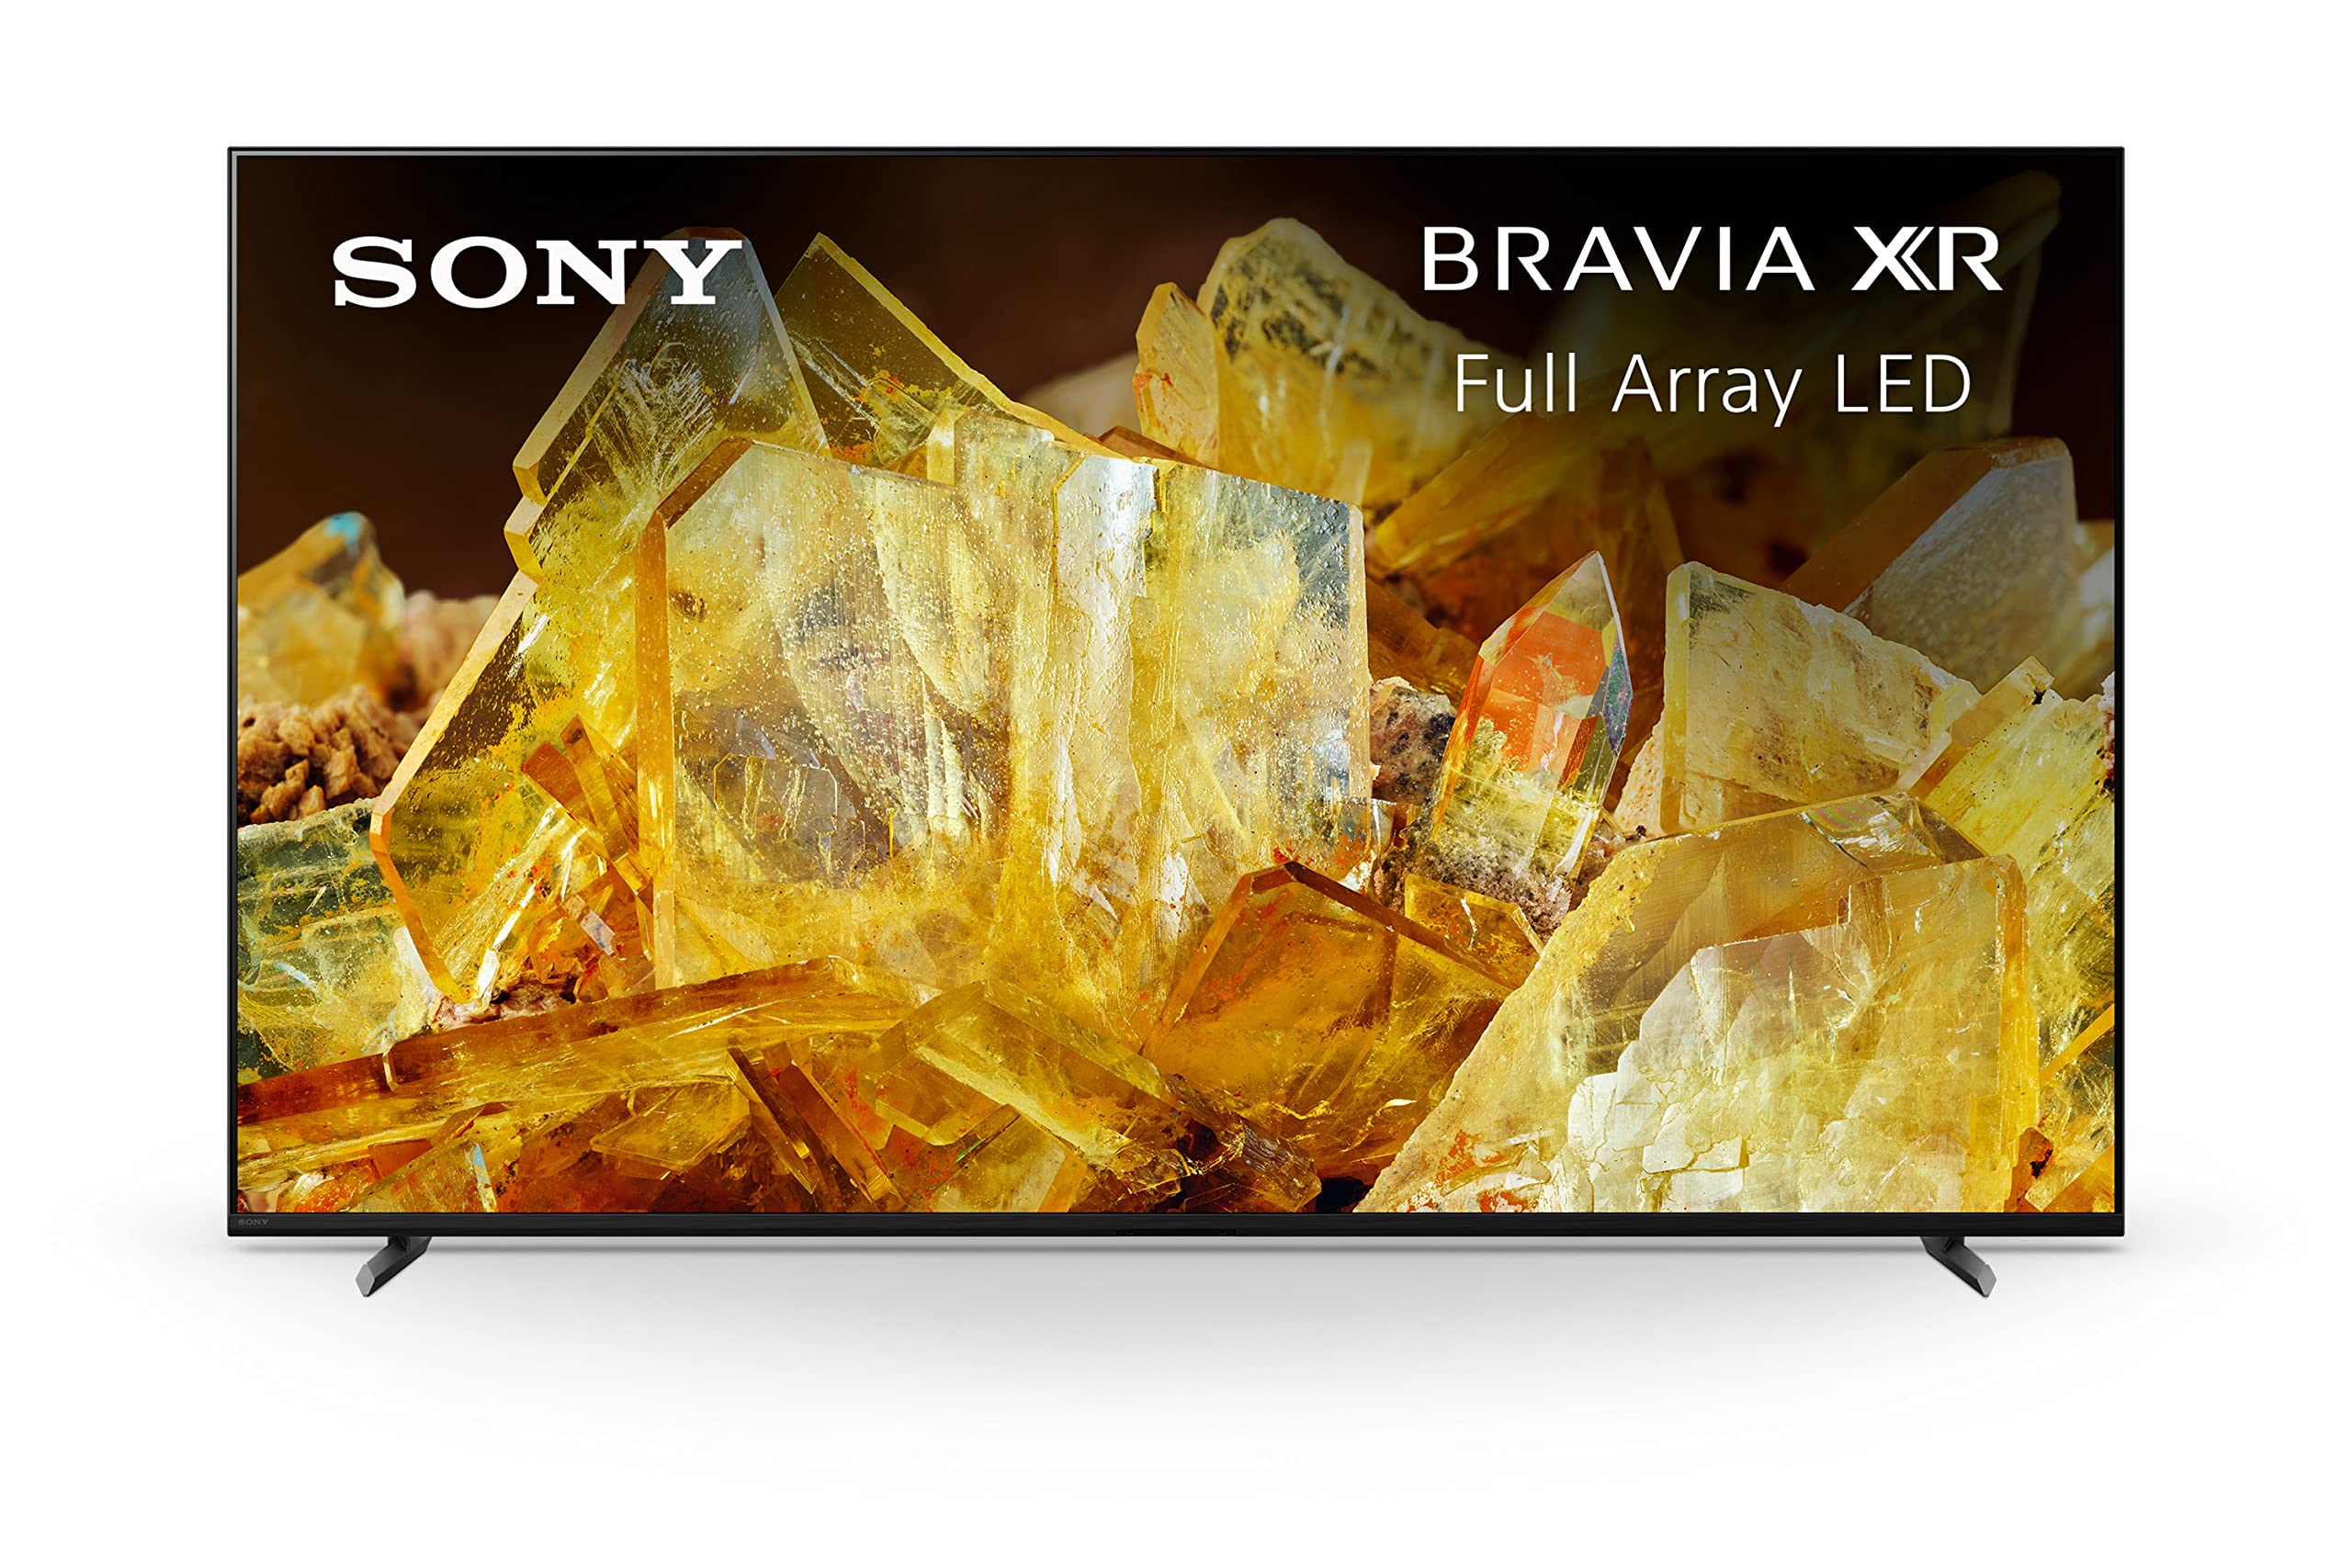 Телевизор Sony Bravia X90L XR-85X90L